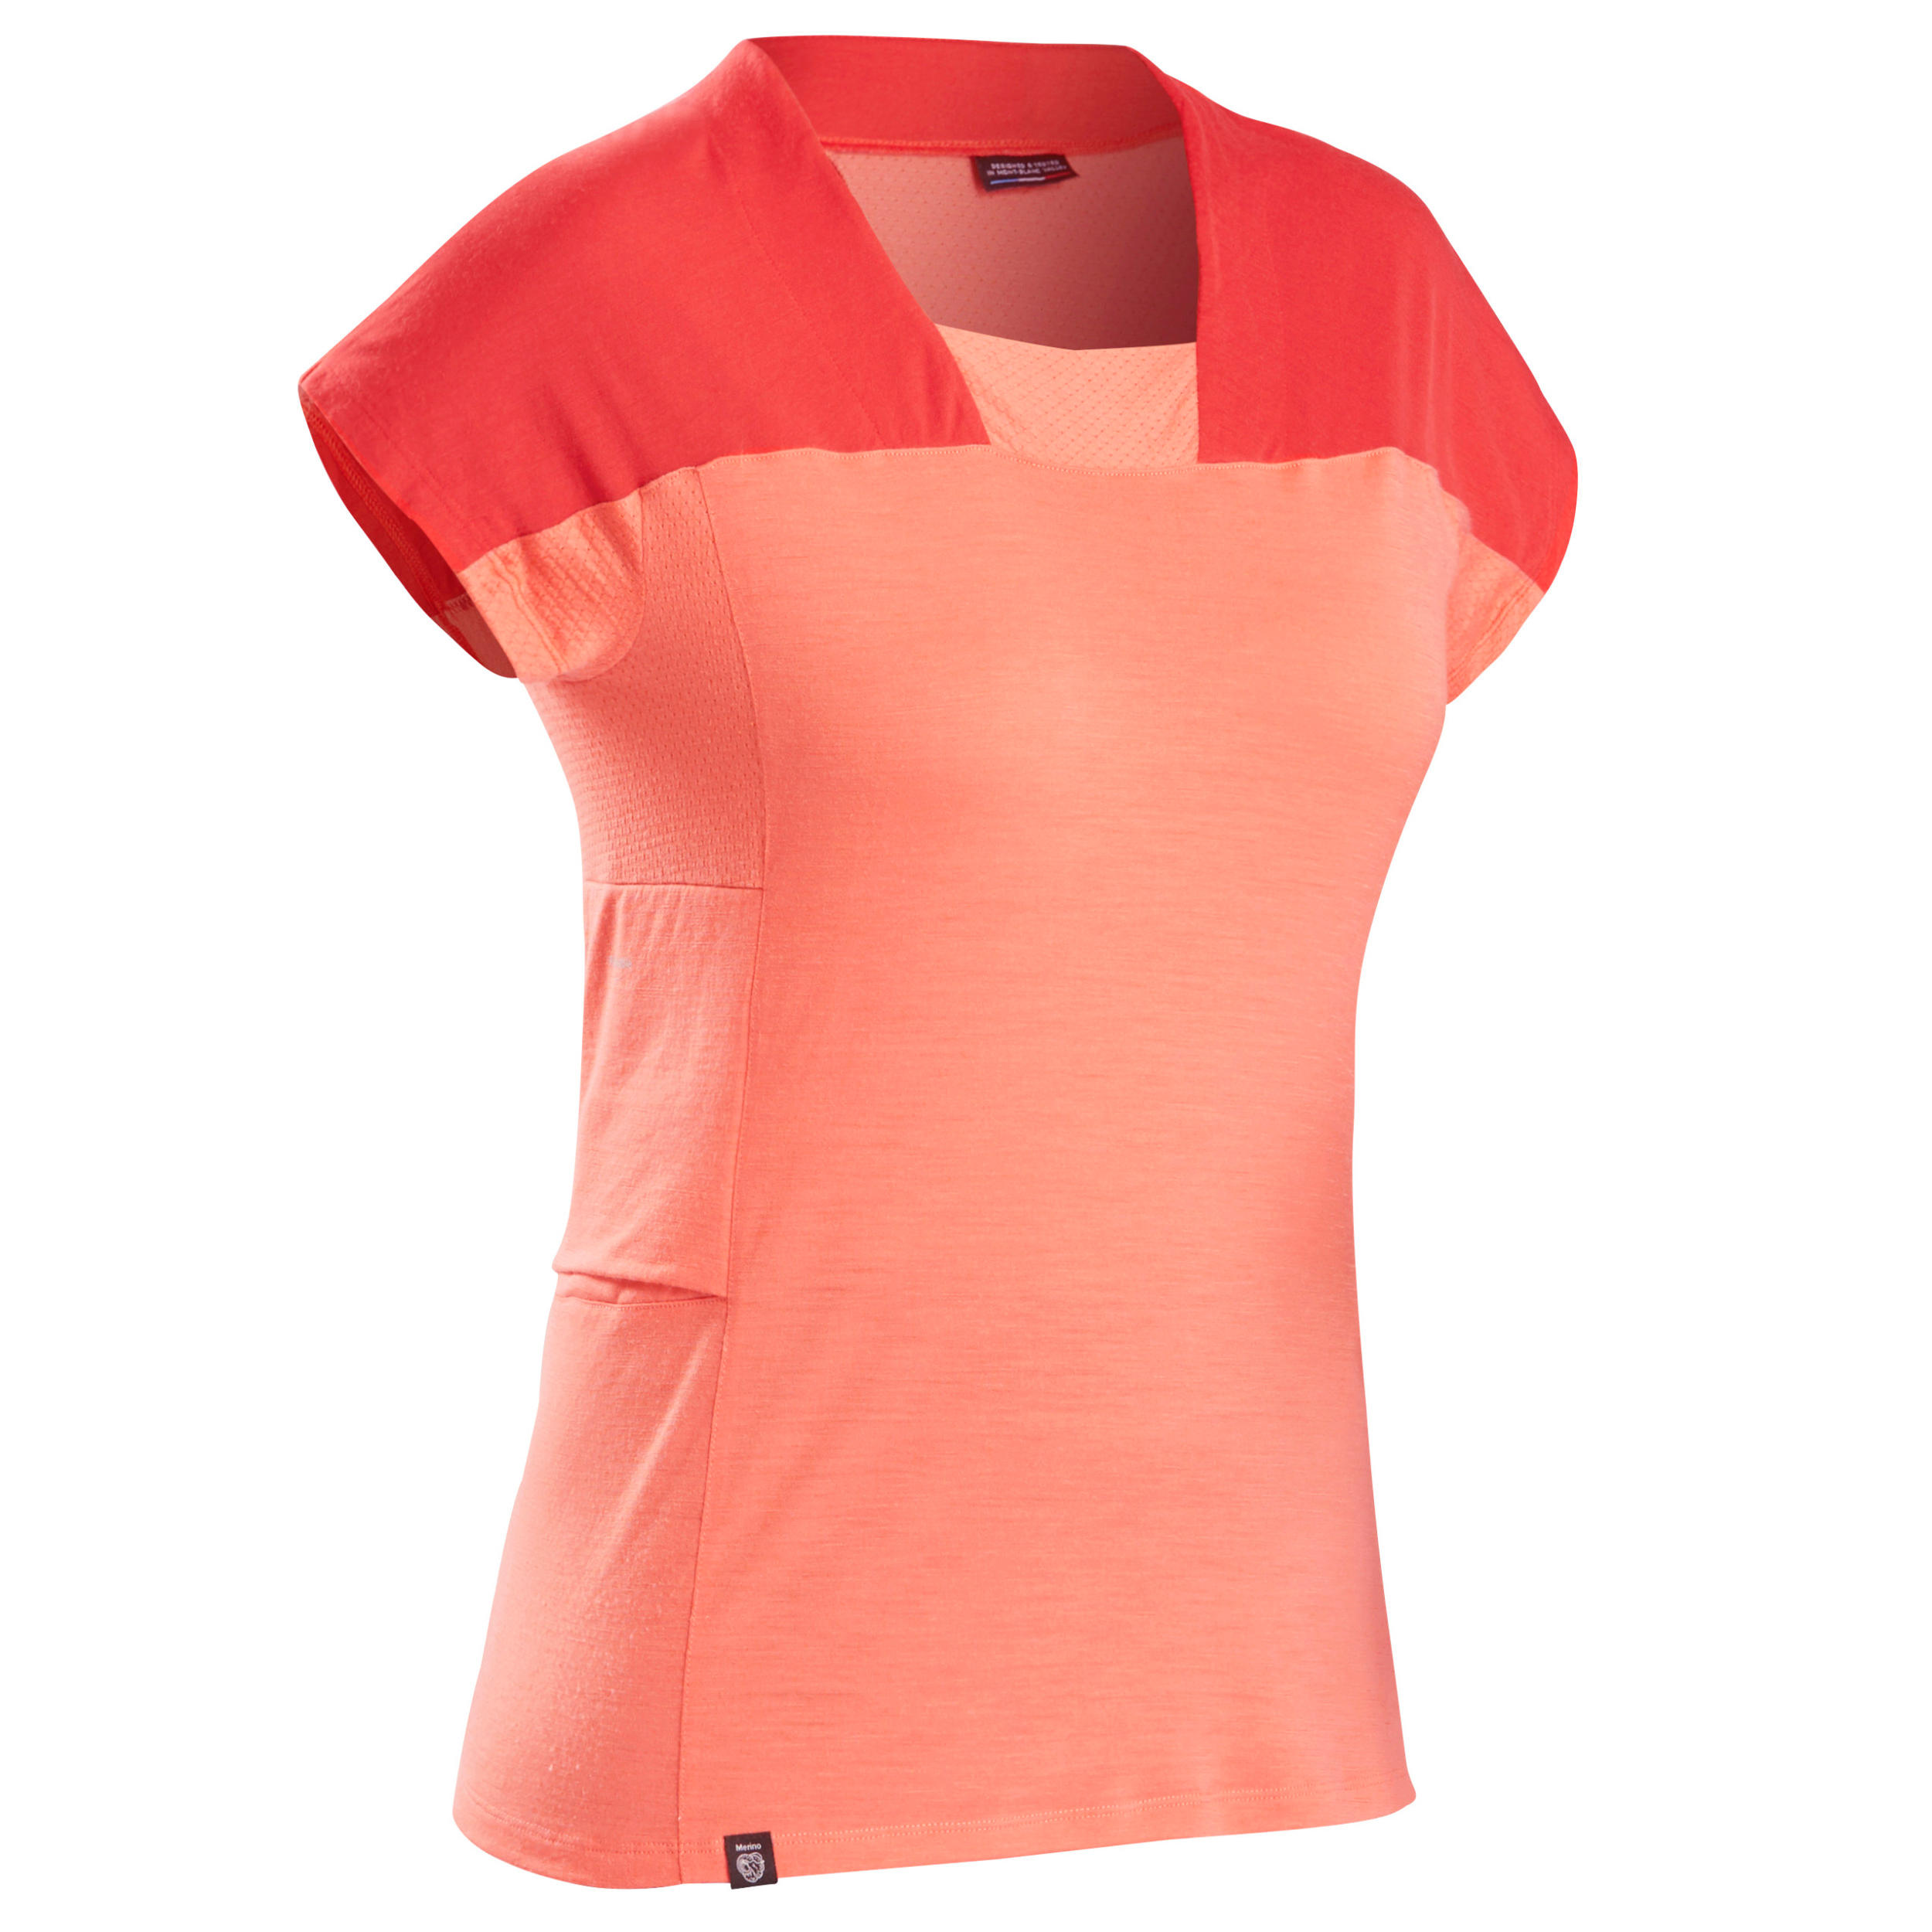 FORCLAZ Mountain Trekking Merino T-Shirt - Women's TREK 500 - Coral